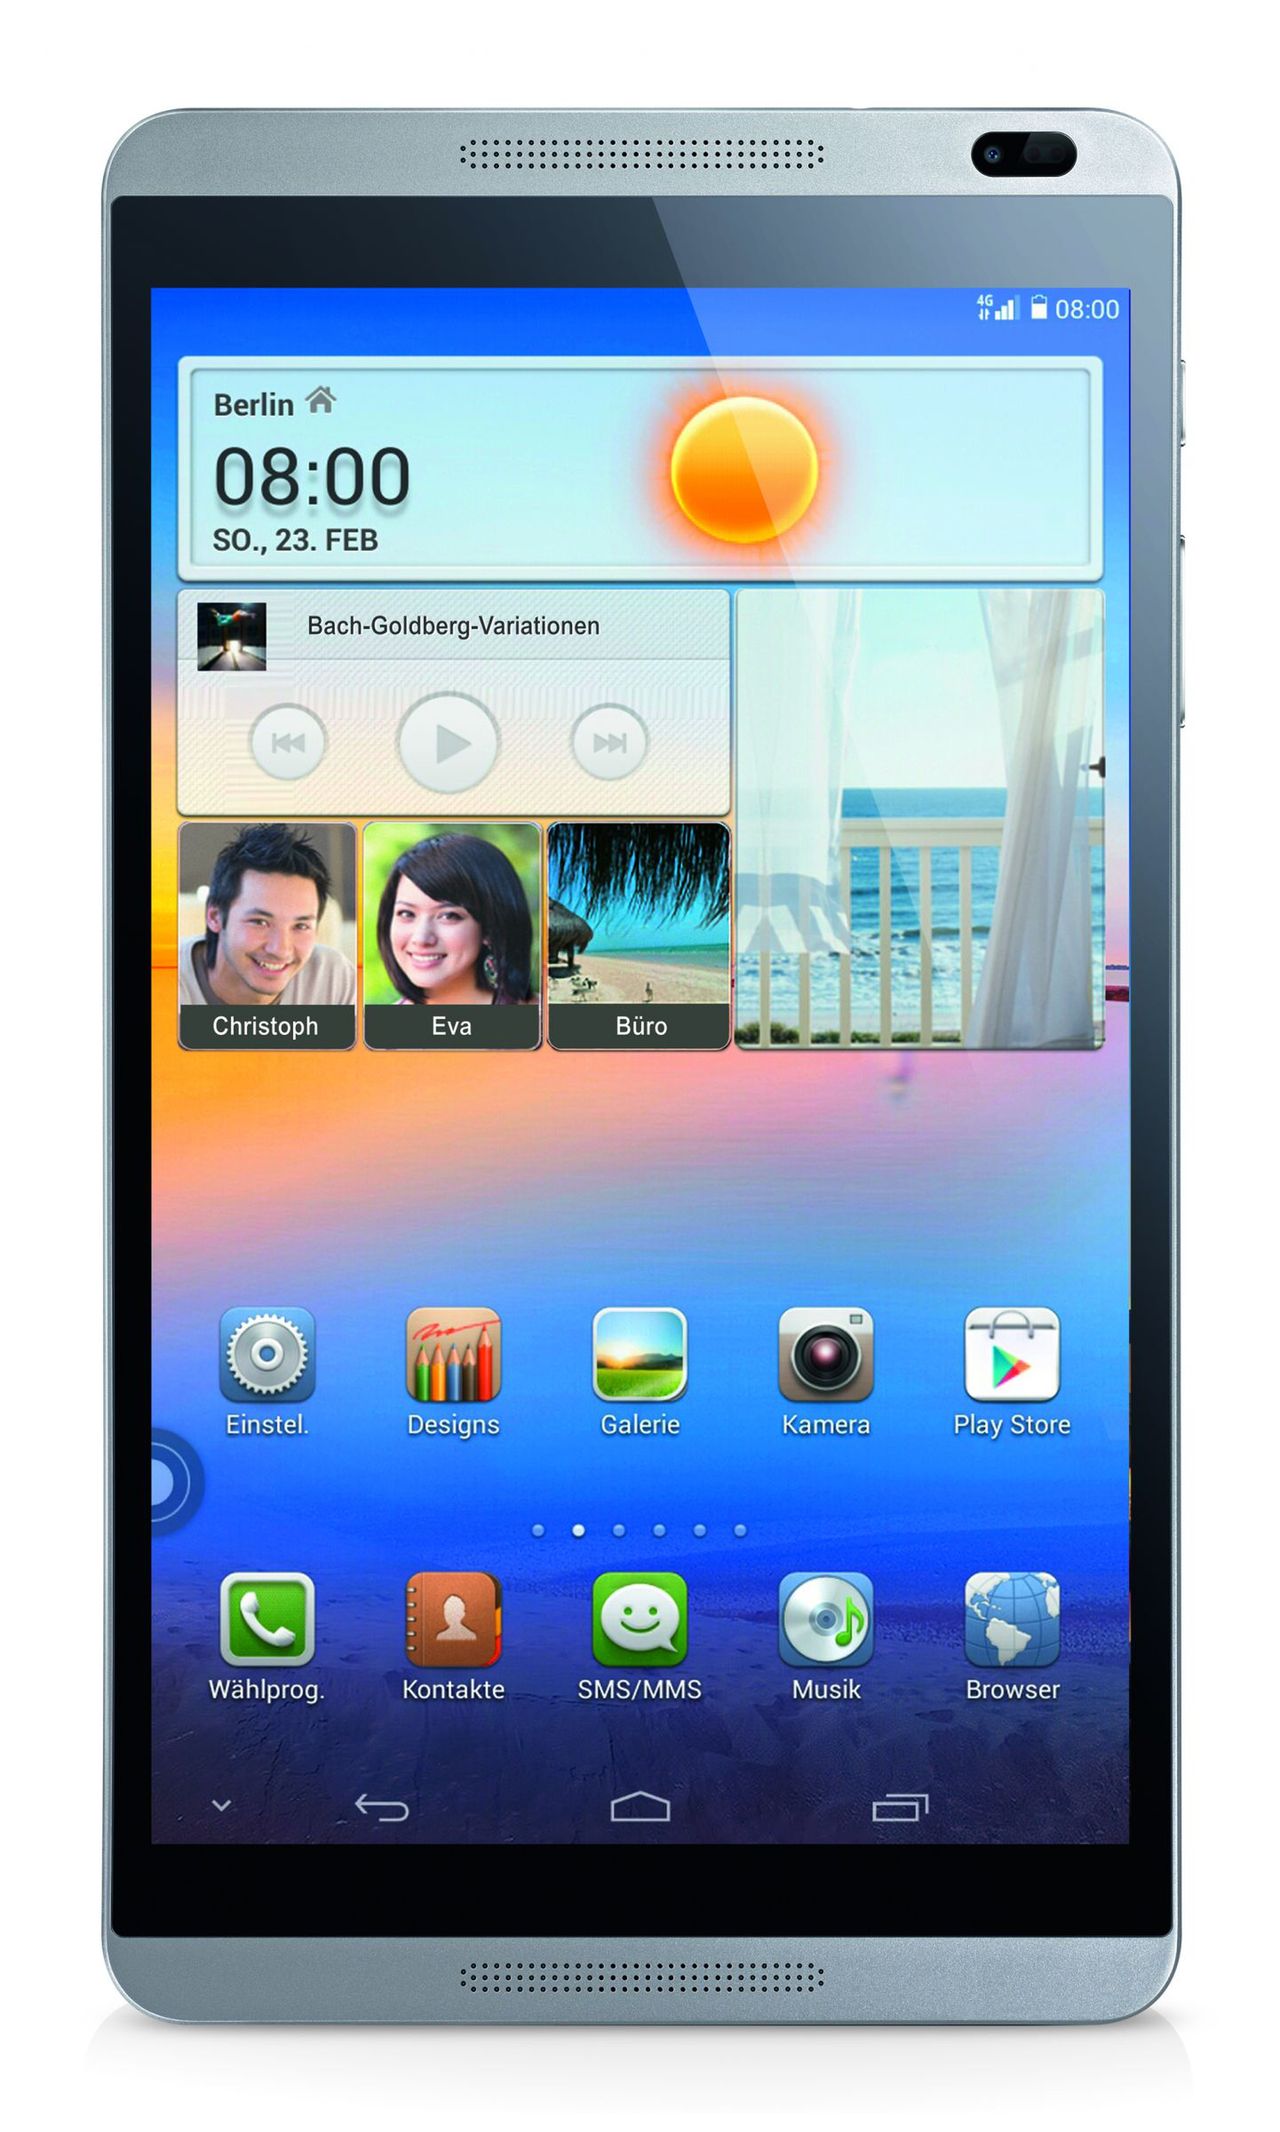 Huawei MediaPad M1